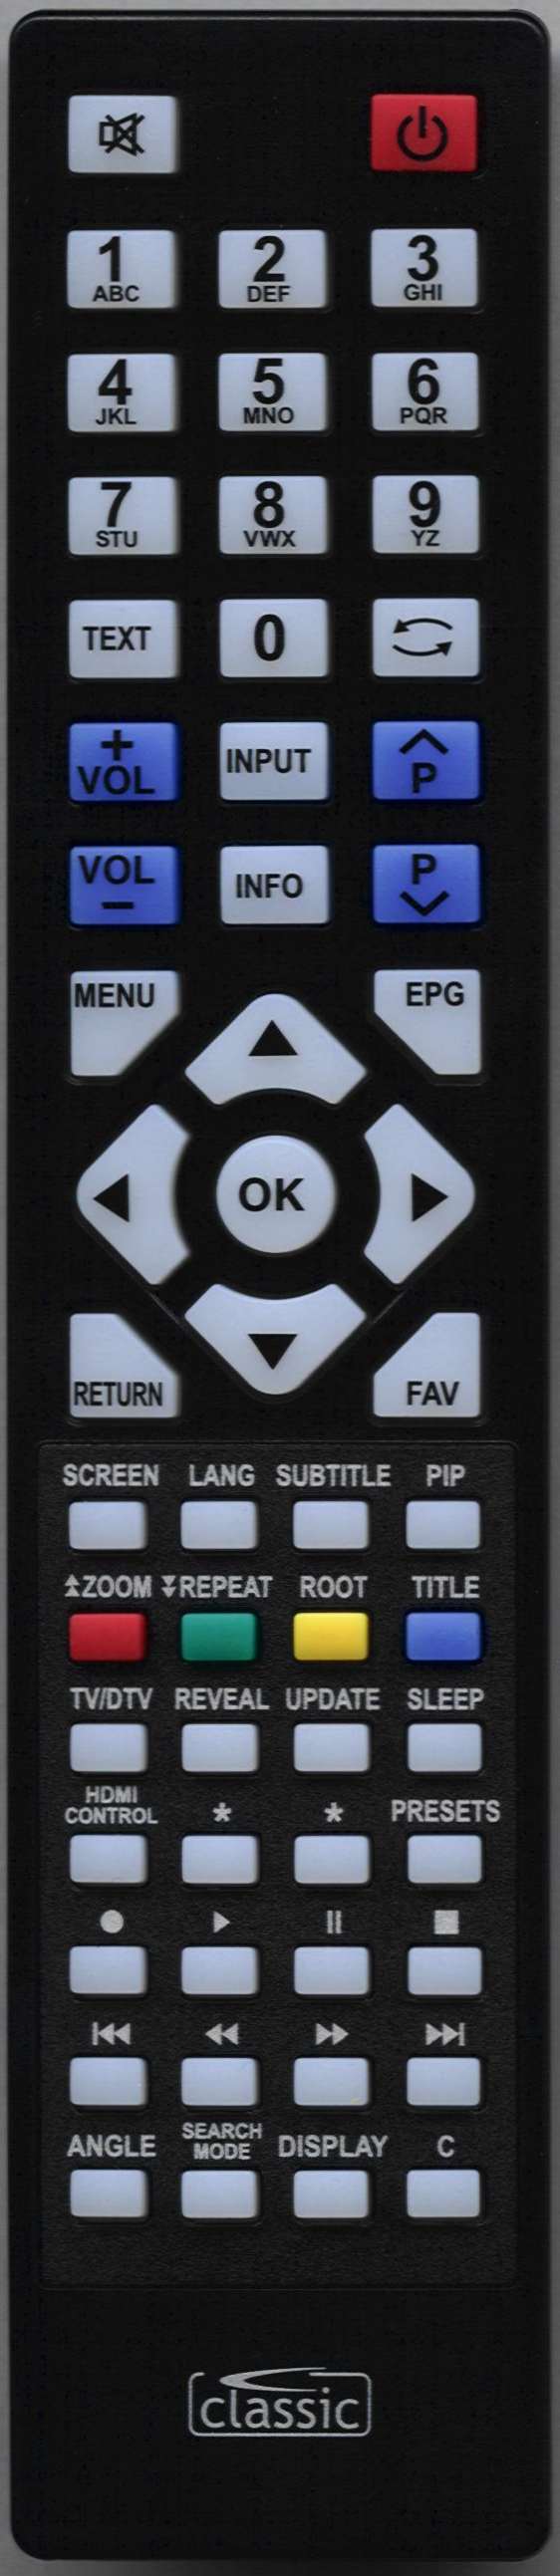 DIGIHOME 19911HDDVD Remote Control Alternative